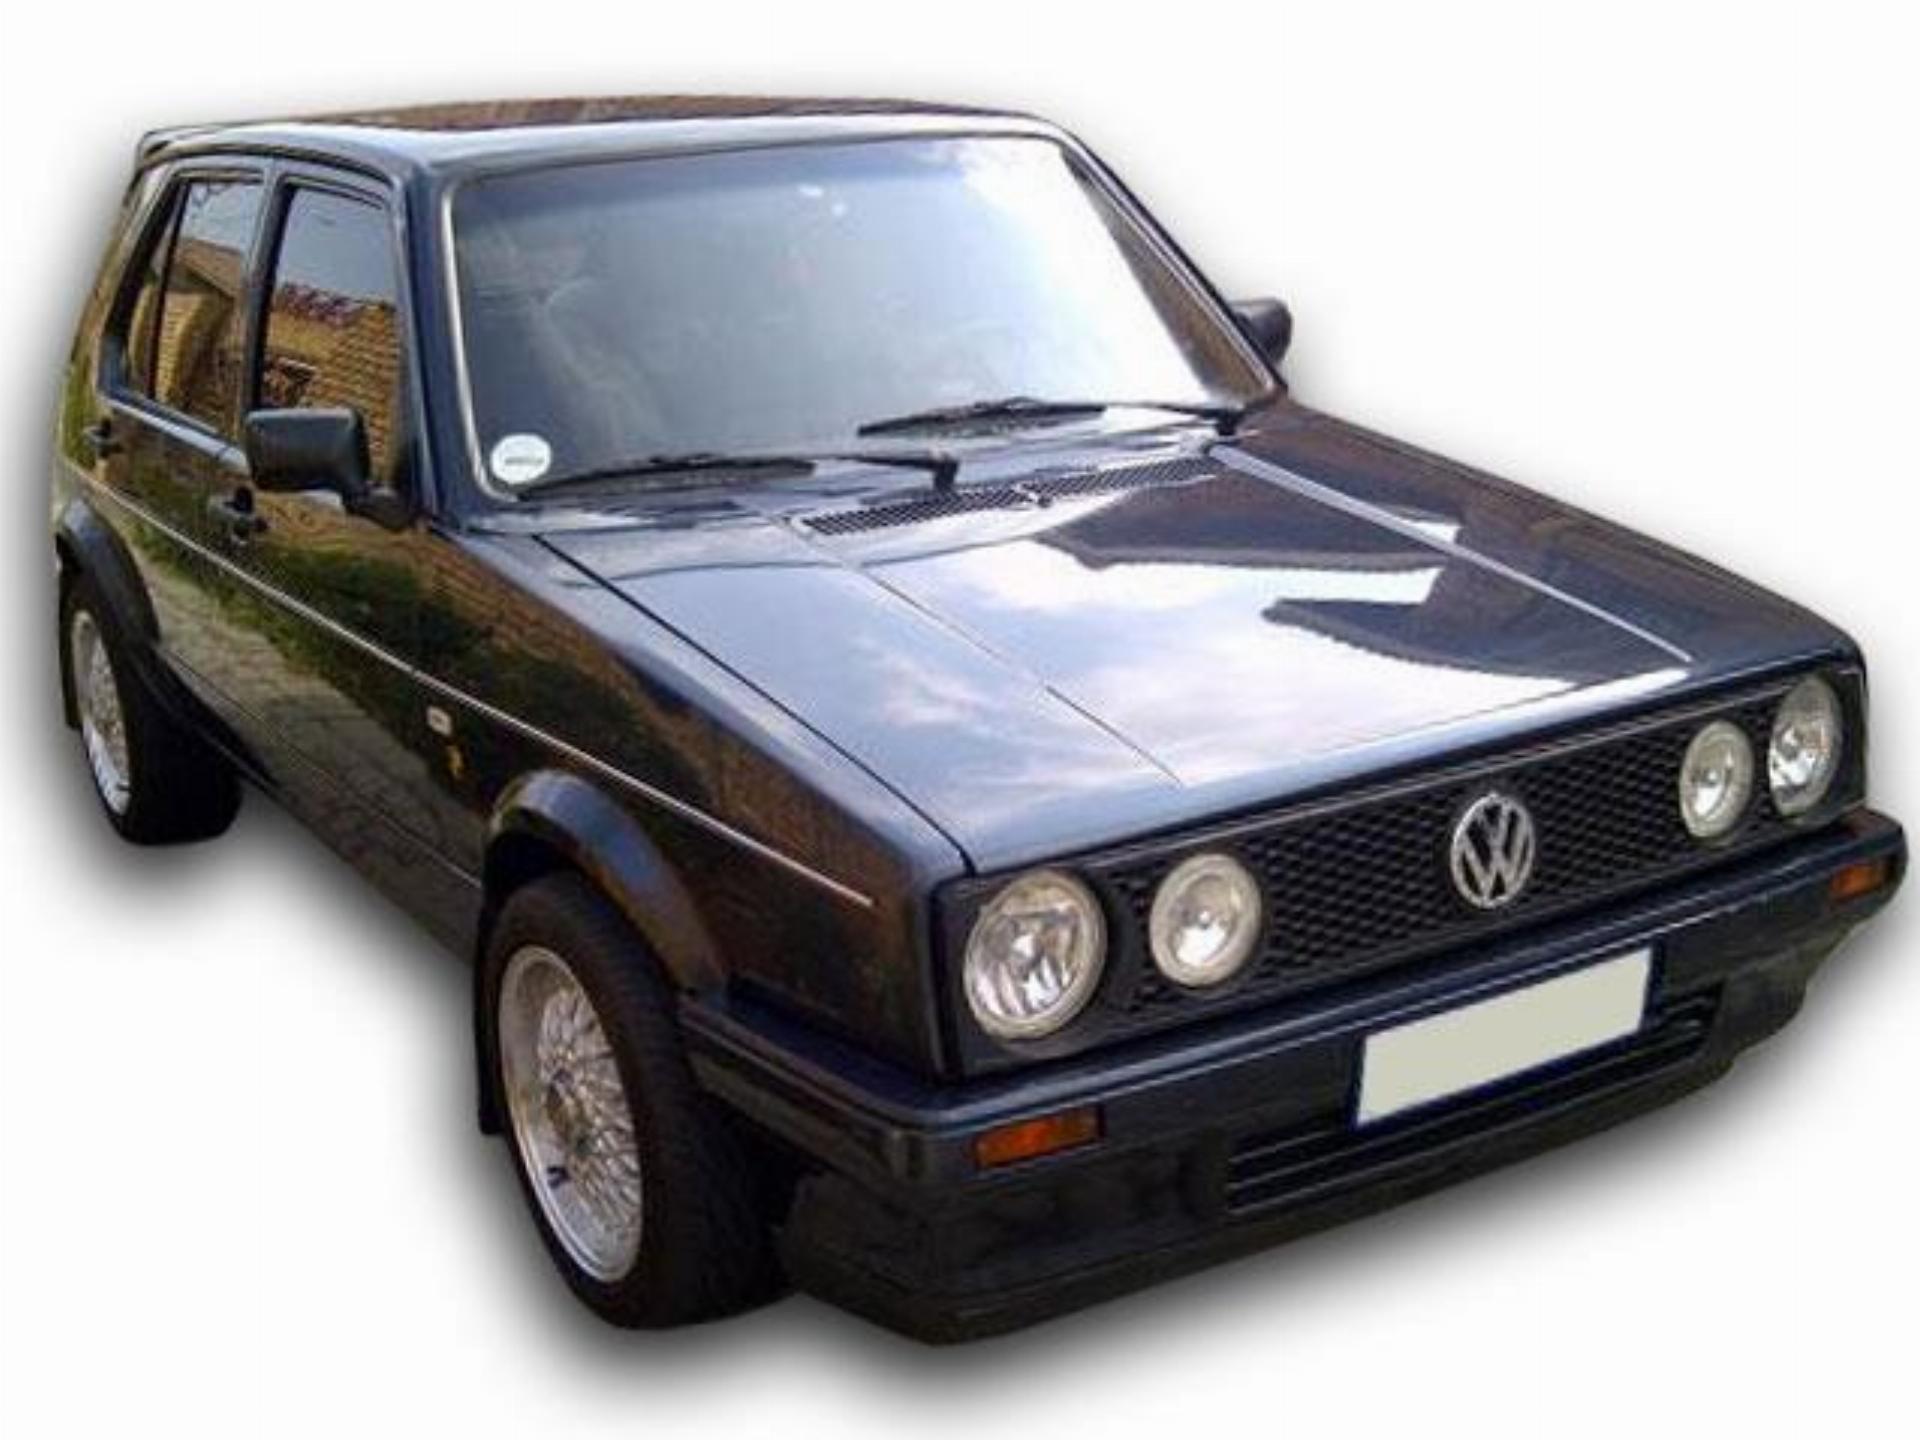 Volkswagen Citi Golf 1.4I Tenacity